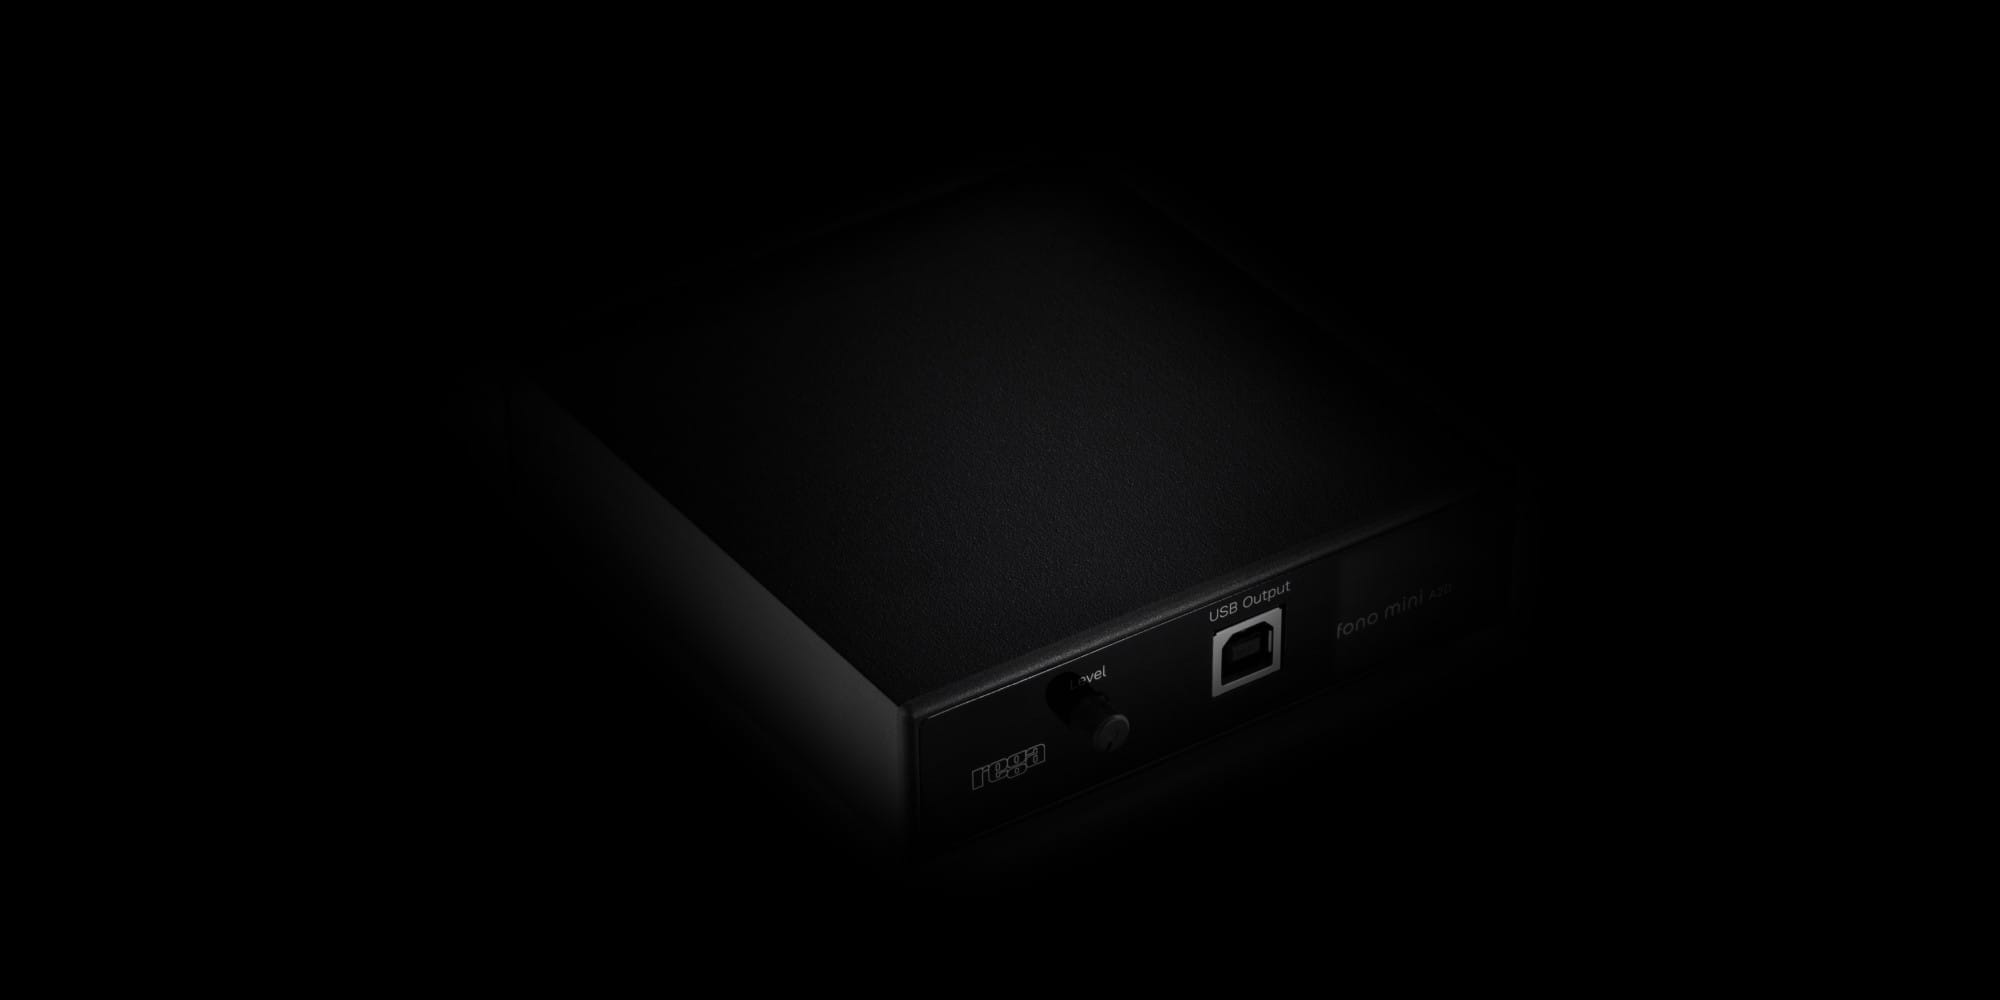 Rega | Fono Mini A2D Phono Pre-amplifier with USB Interface